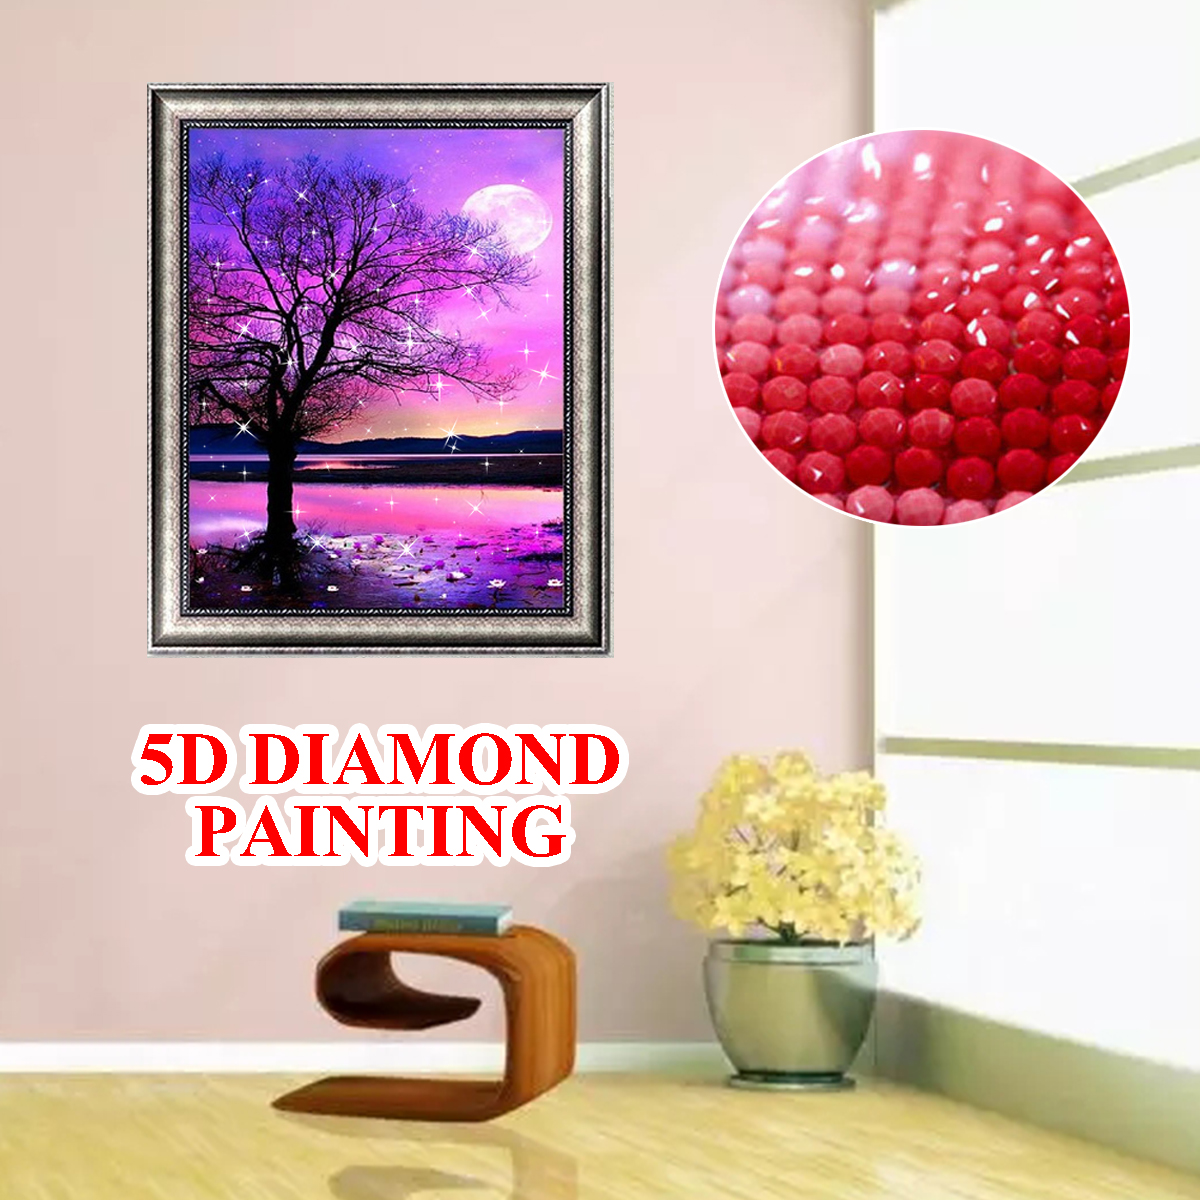 DIY 5D Diamond Painting Kit Night Tree Landscape Handmade Craft Cross Stitch Embroidery Home Wall Decorations